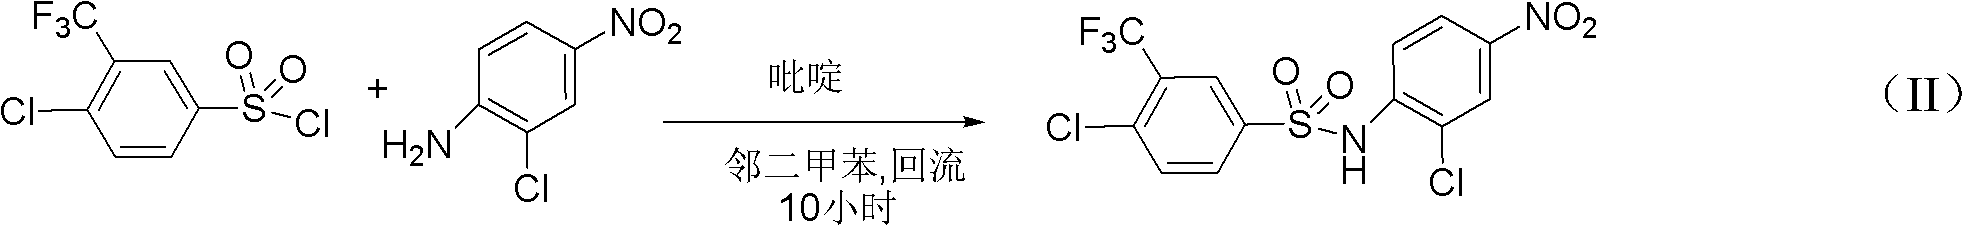 Preparation method for N-(2- chlorine-4-phenyl)-4- chlorine-3-trifluoromethyl benzene sulfonamide